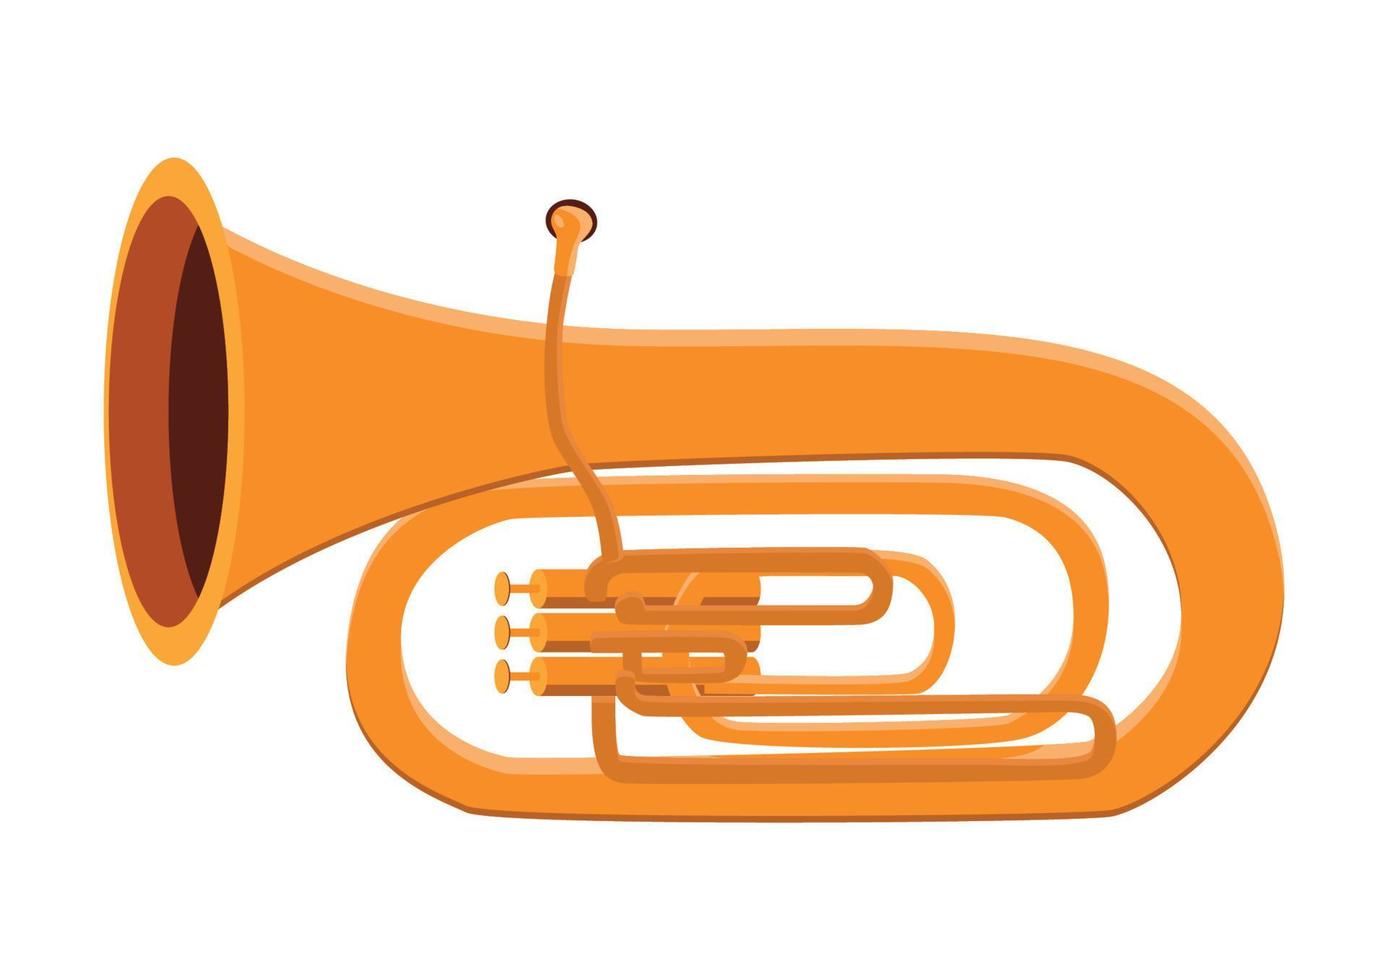 Golden tuba vector design. Tuba clipart. Tuba musical wind instrument flat cartoon style vector illustration isolated on white background